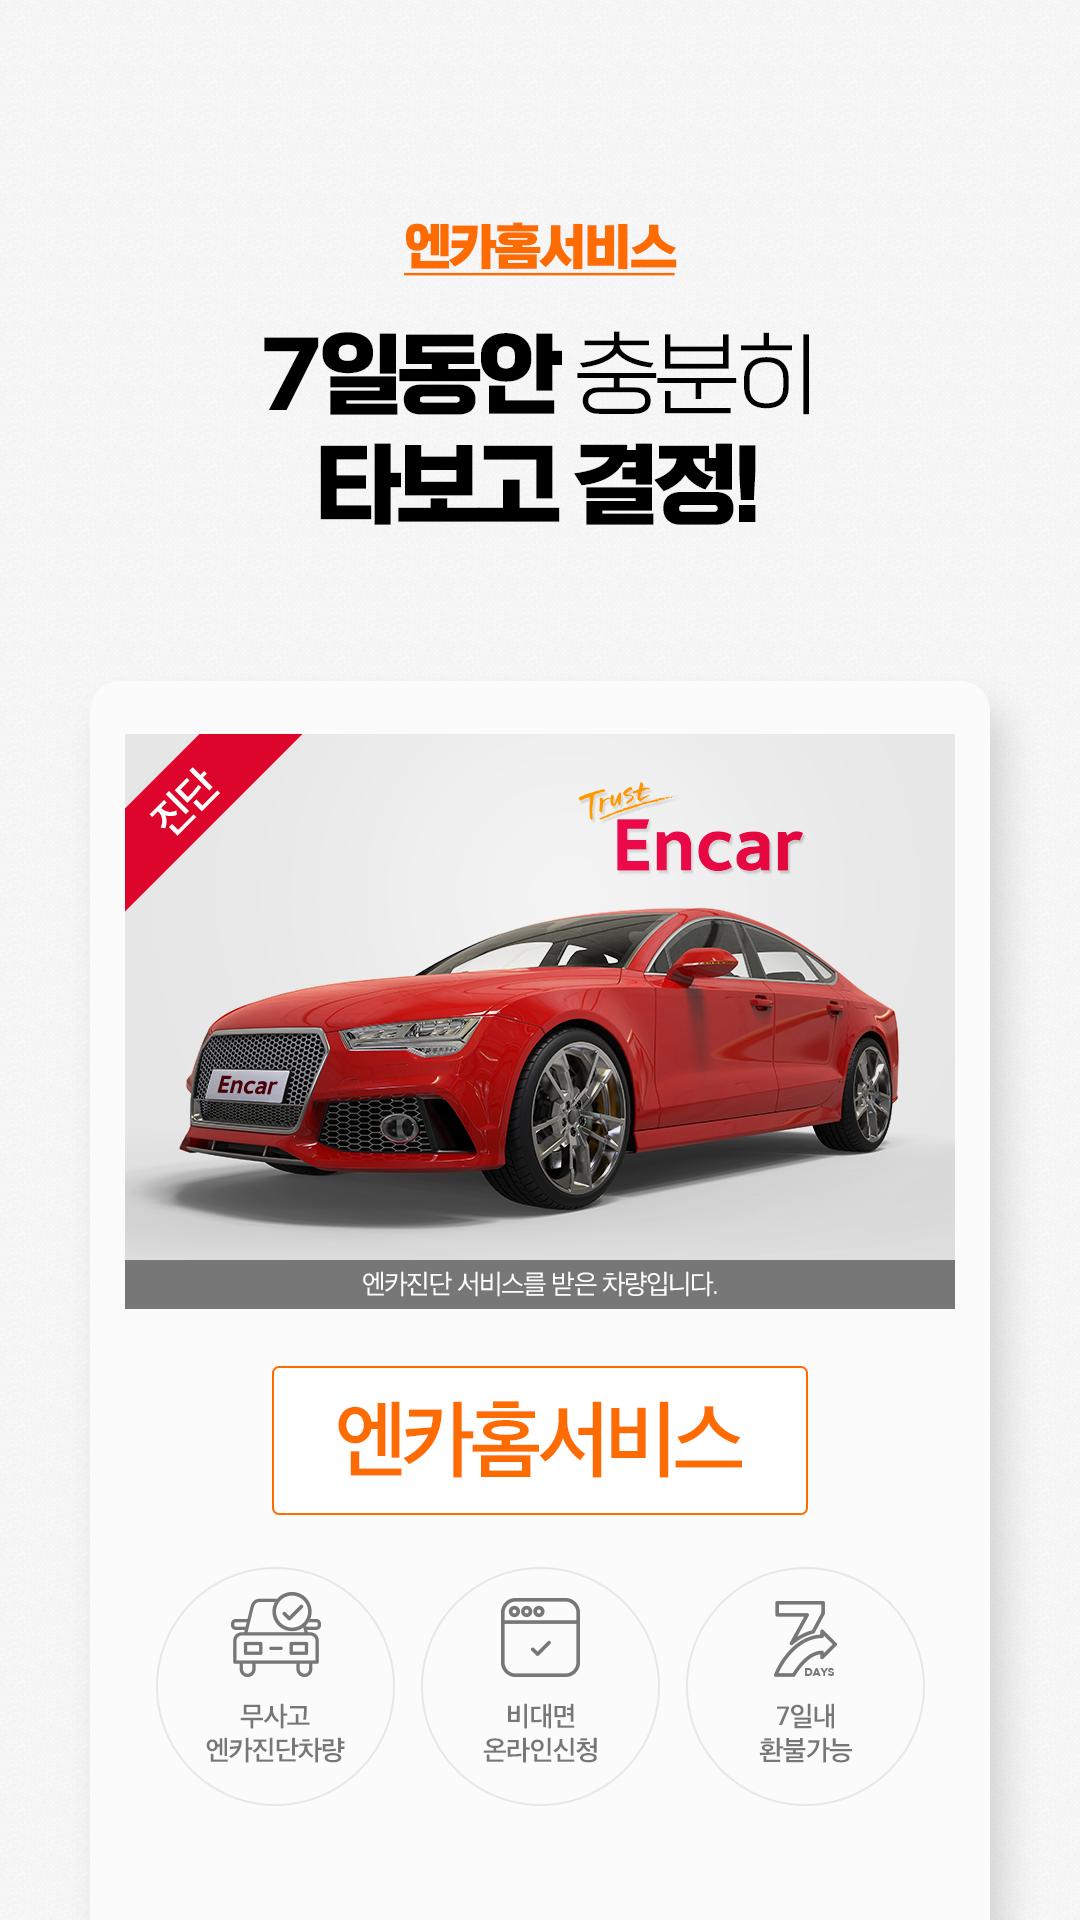 Trust encar. Энкар Корея. Encar на русском. Encar.Official. Encar logo.